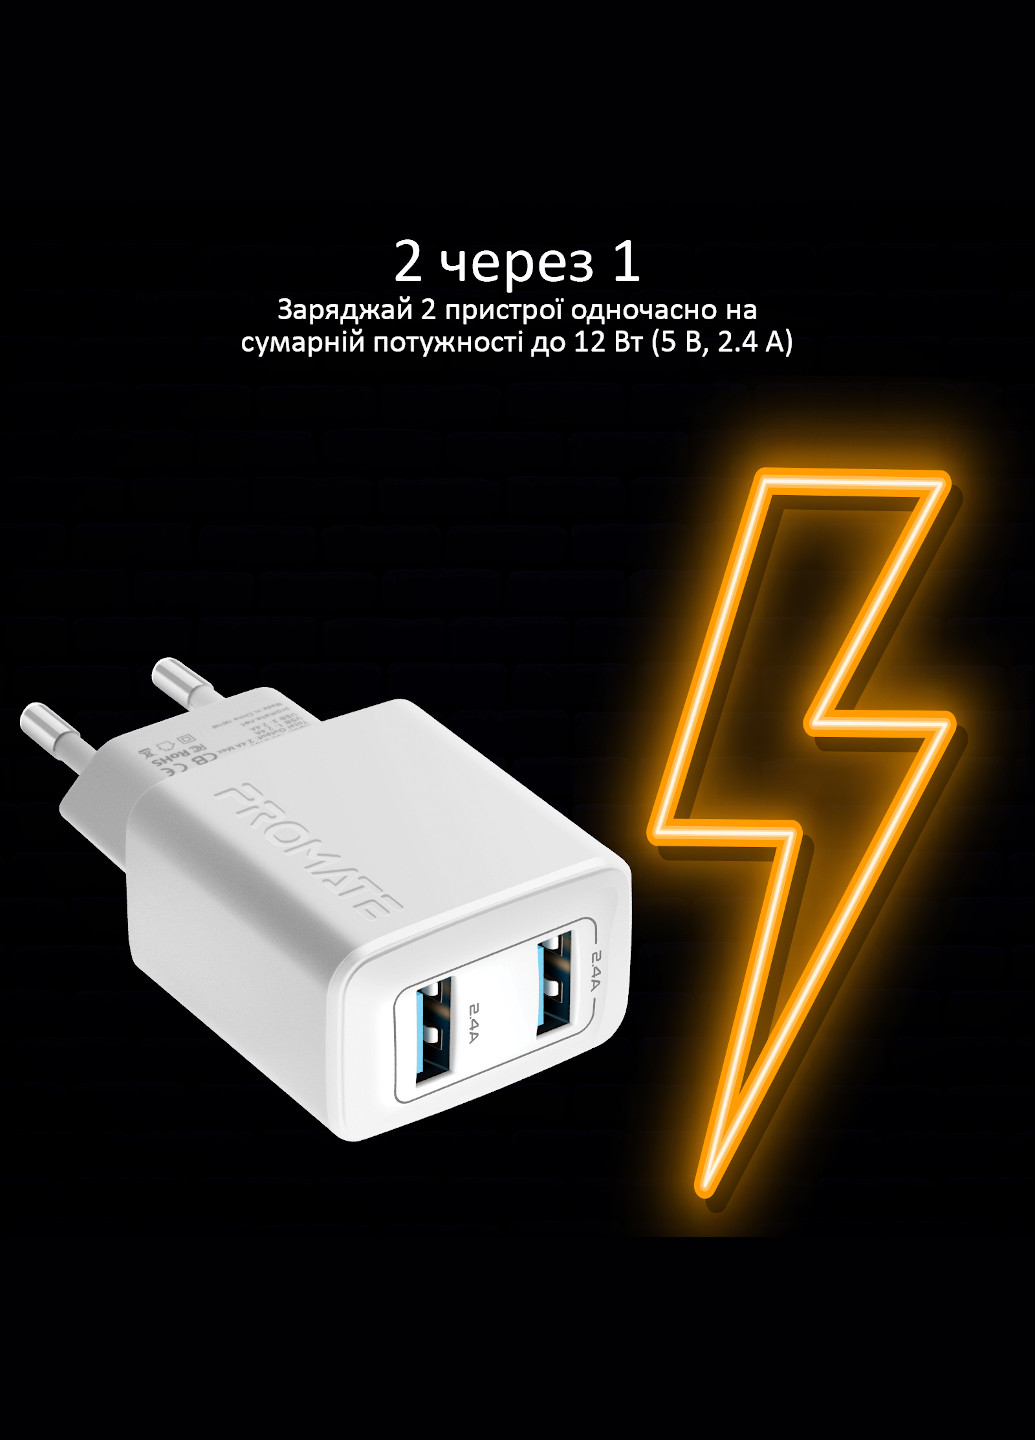 Сетевое зарядное устройство BiPlug 12Вт 2 USB White Promate biplug.white (185445532)